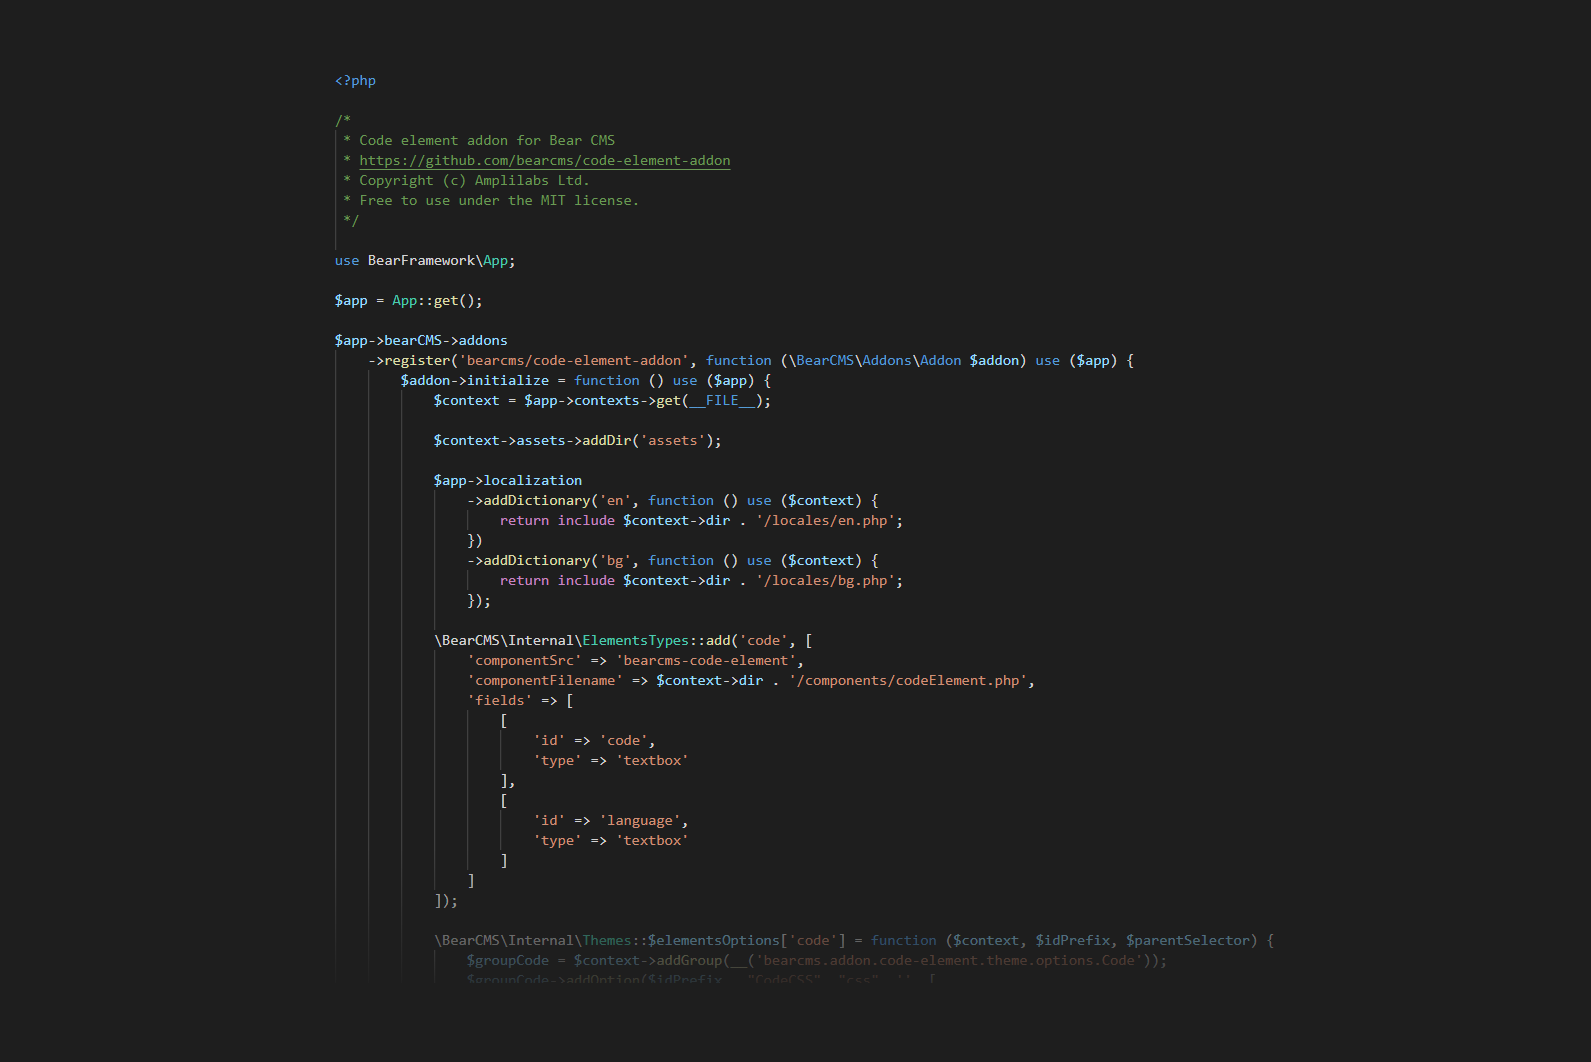 New addon: Source code element